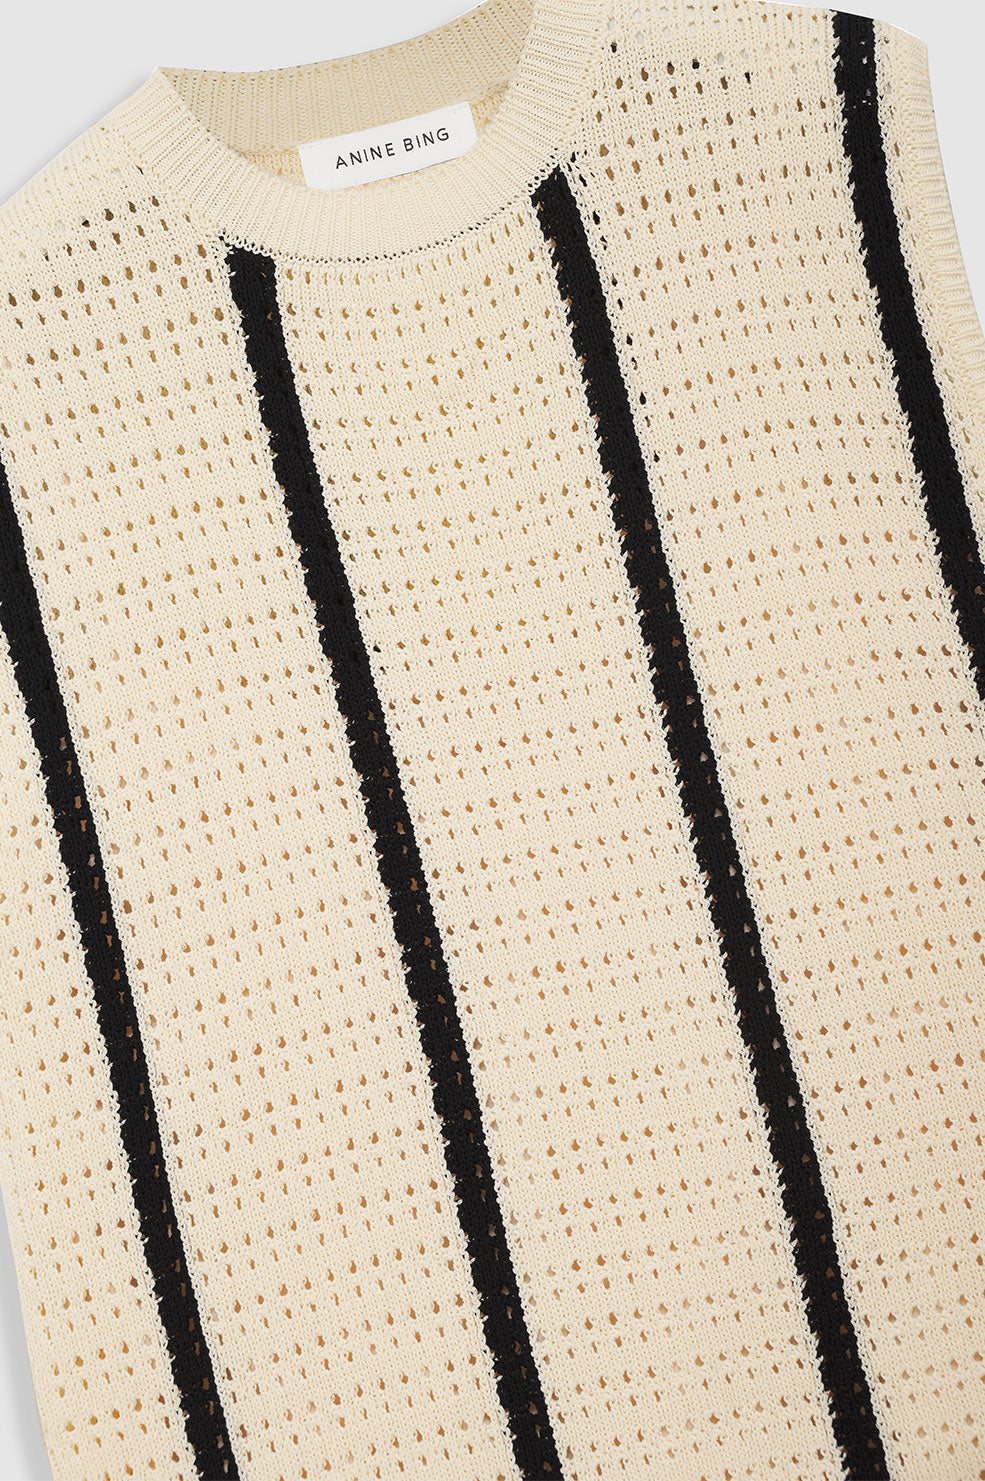 ANINE BING Lanie Dress - Ivory And Black Stripe - Detail View